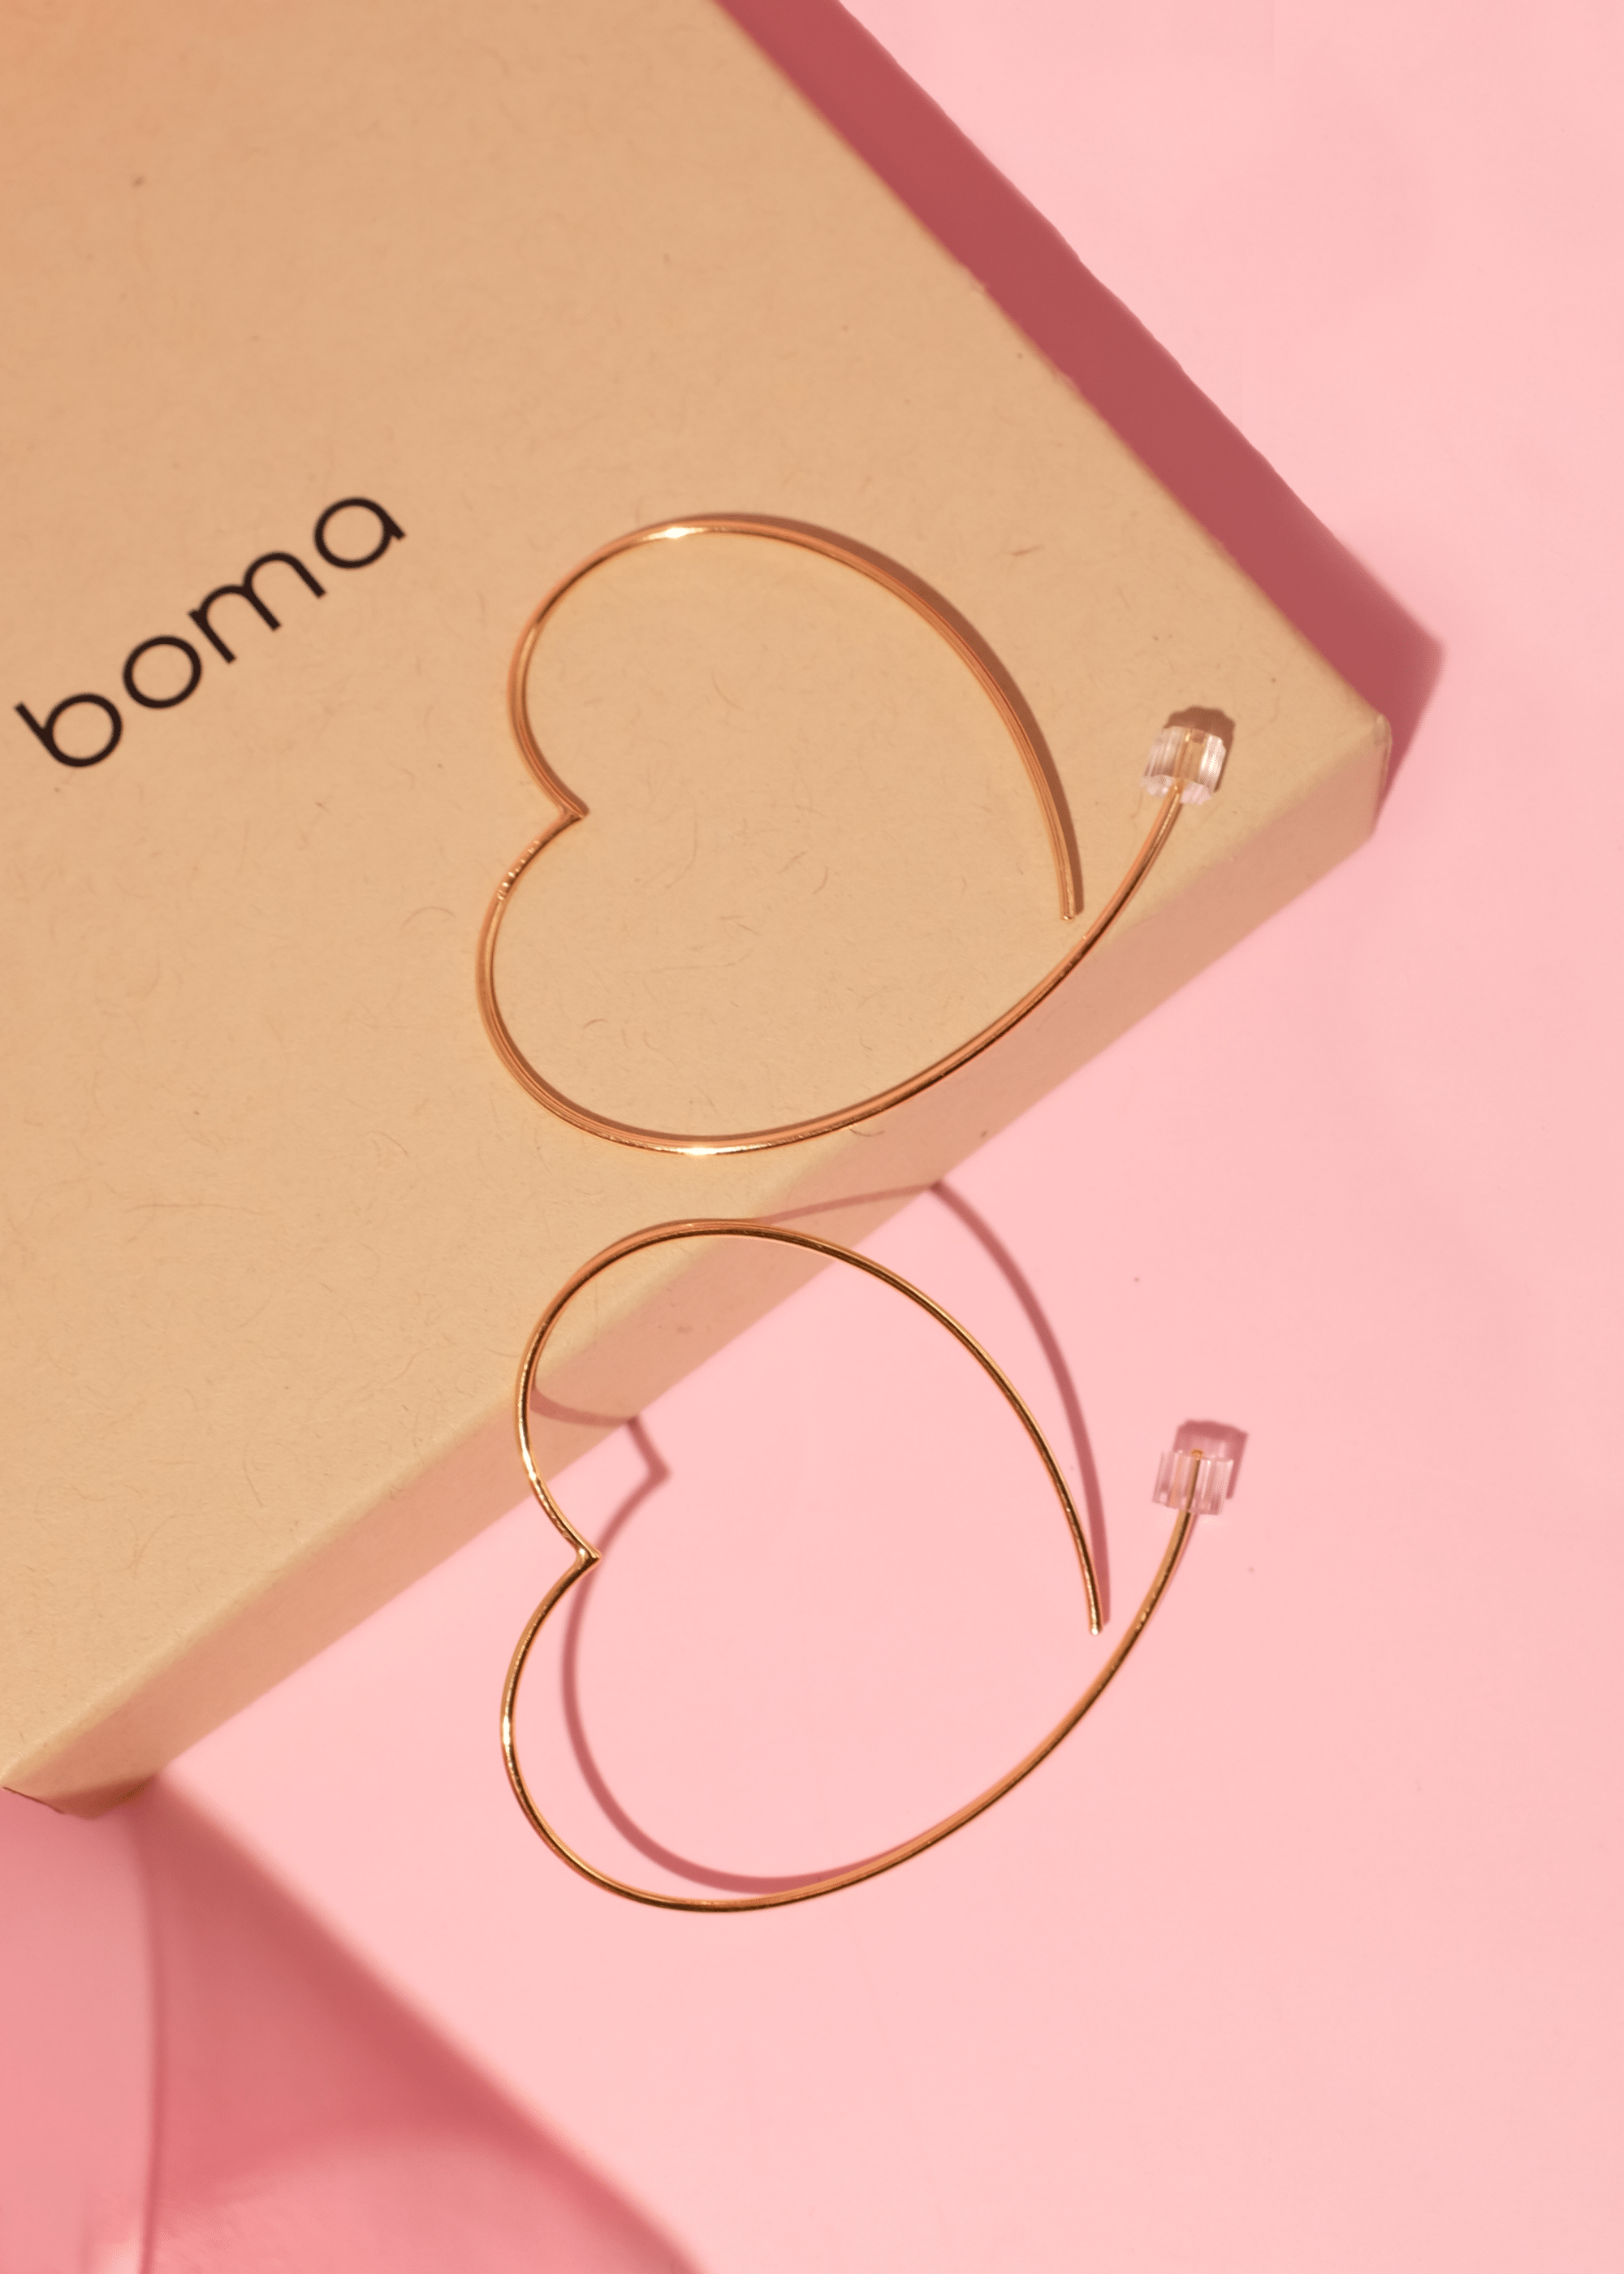 Boma Jewelry Earrings Heart Pull Through Hoops